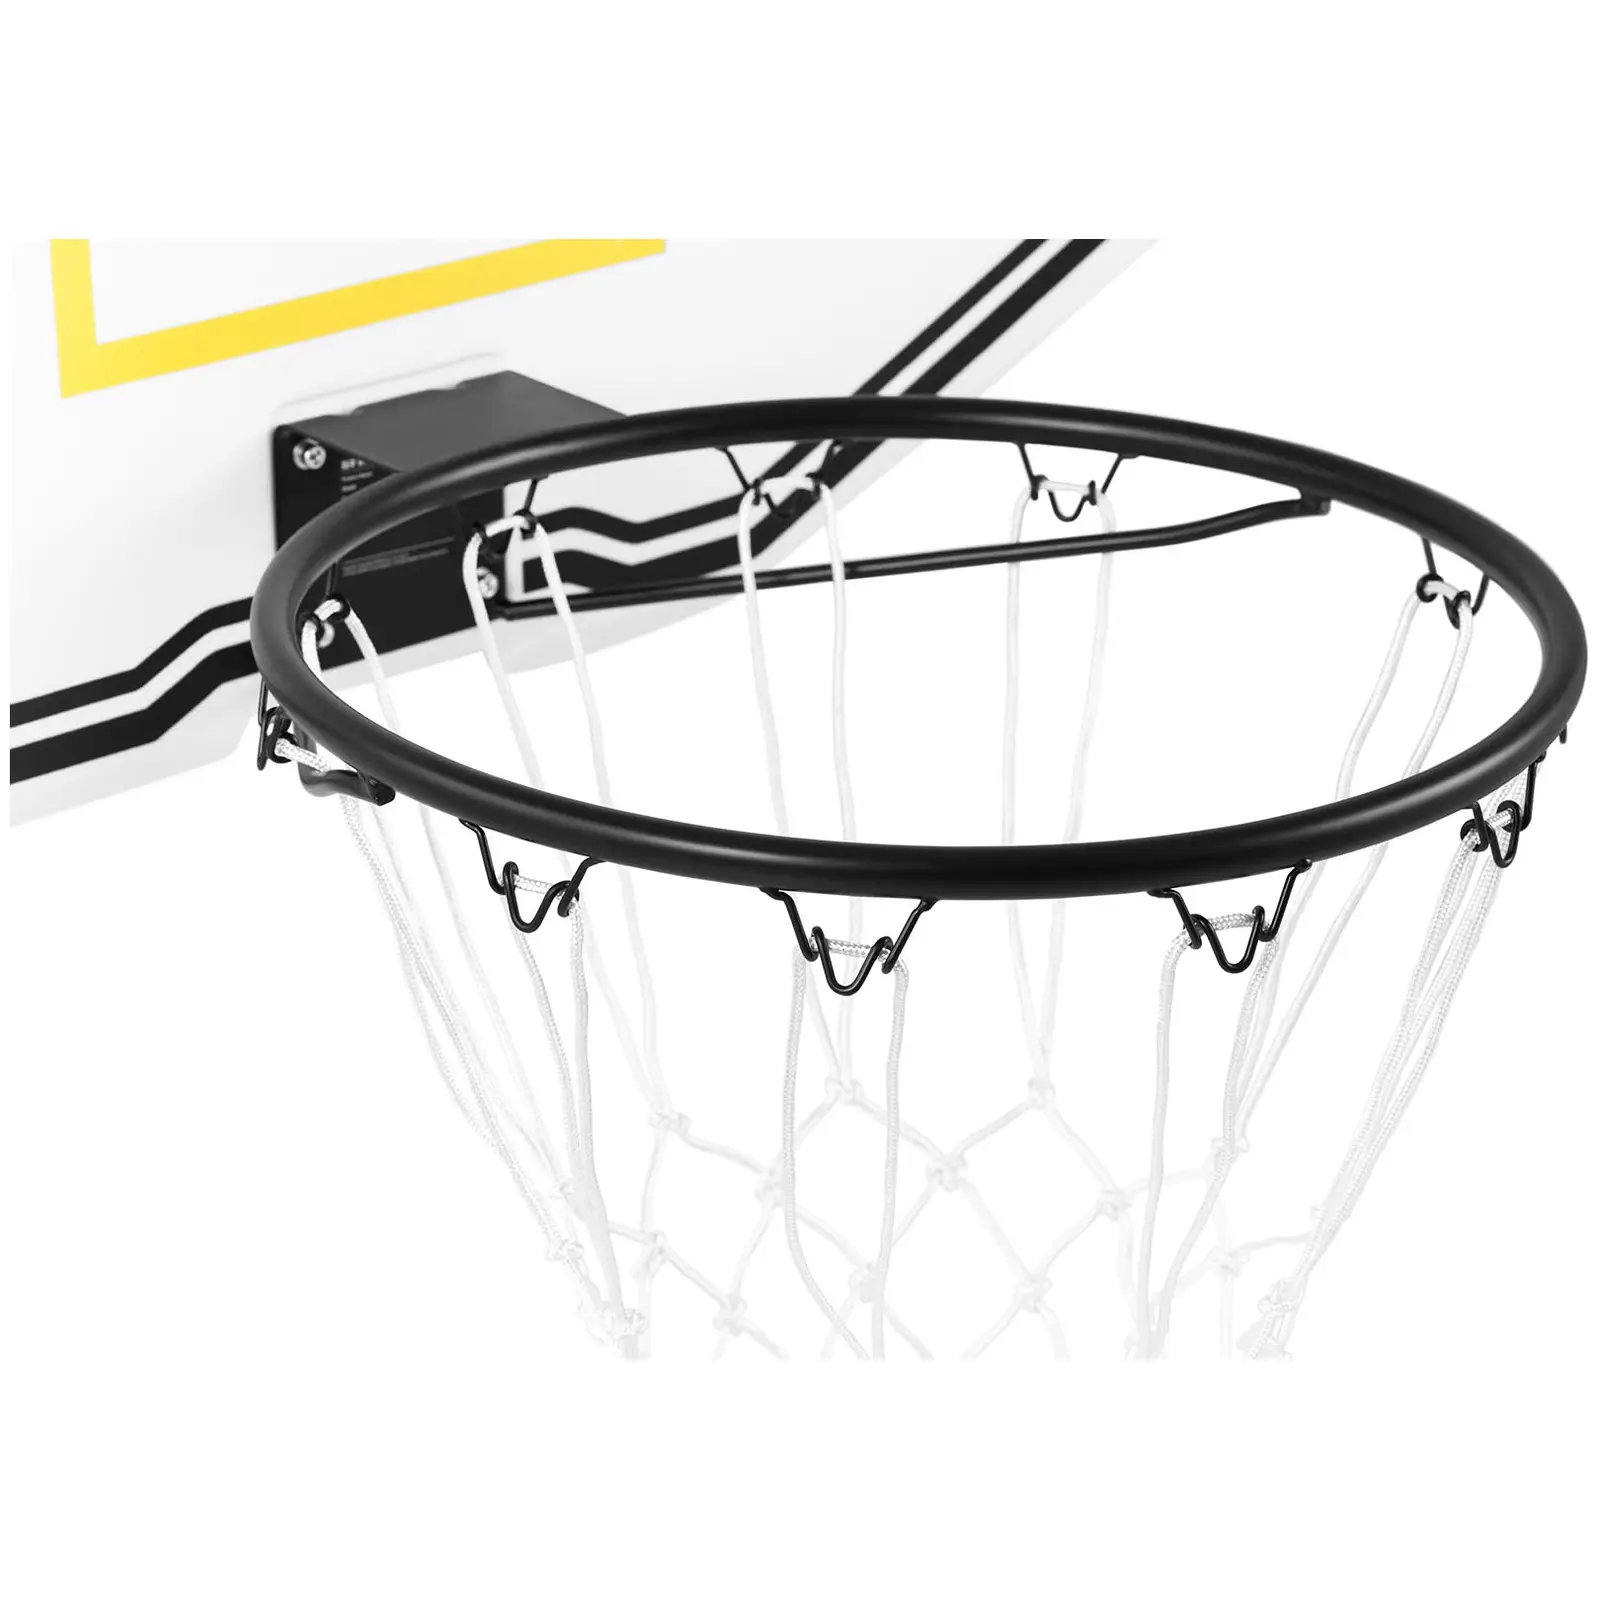 Basketballkorb - 91 x 61 cm - Ringdurchmesser 42,5 cm